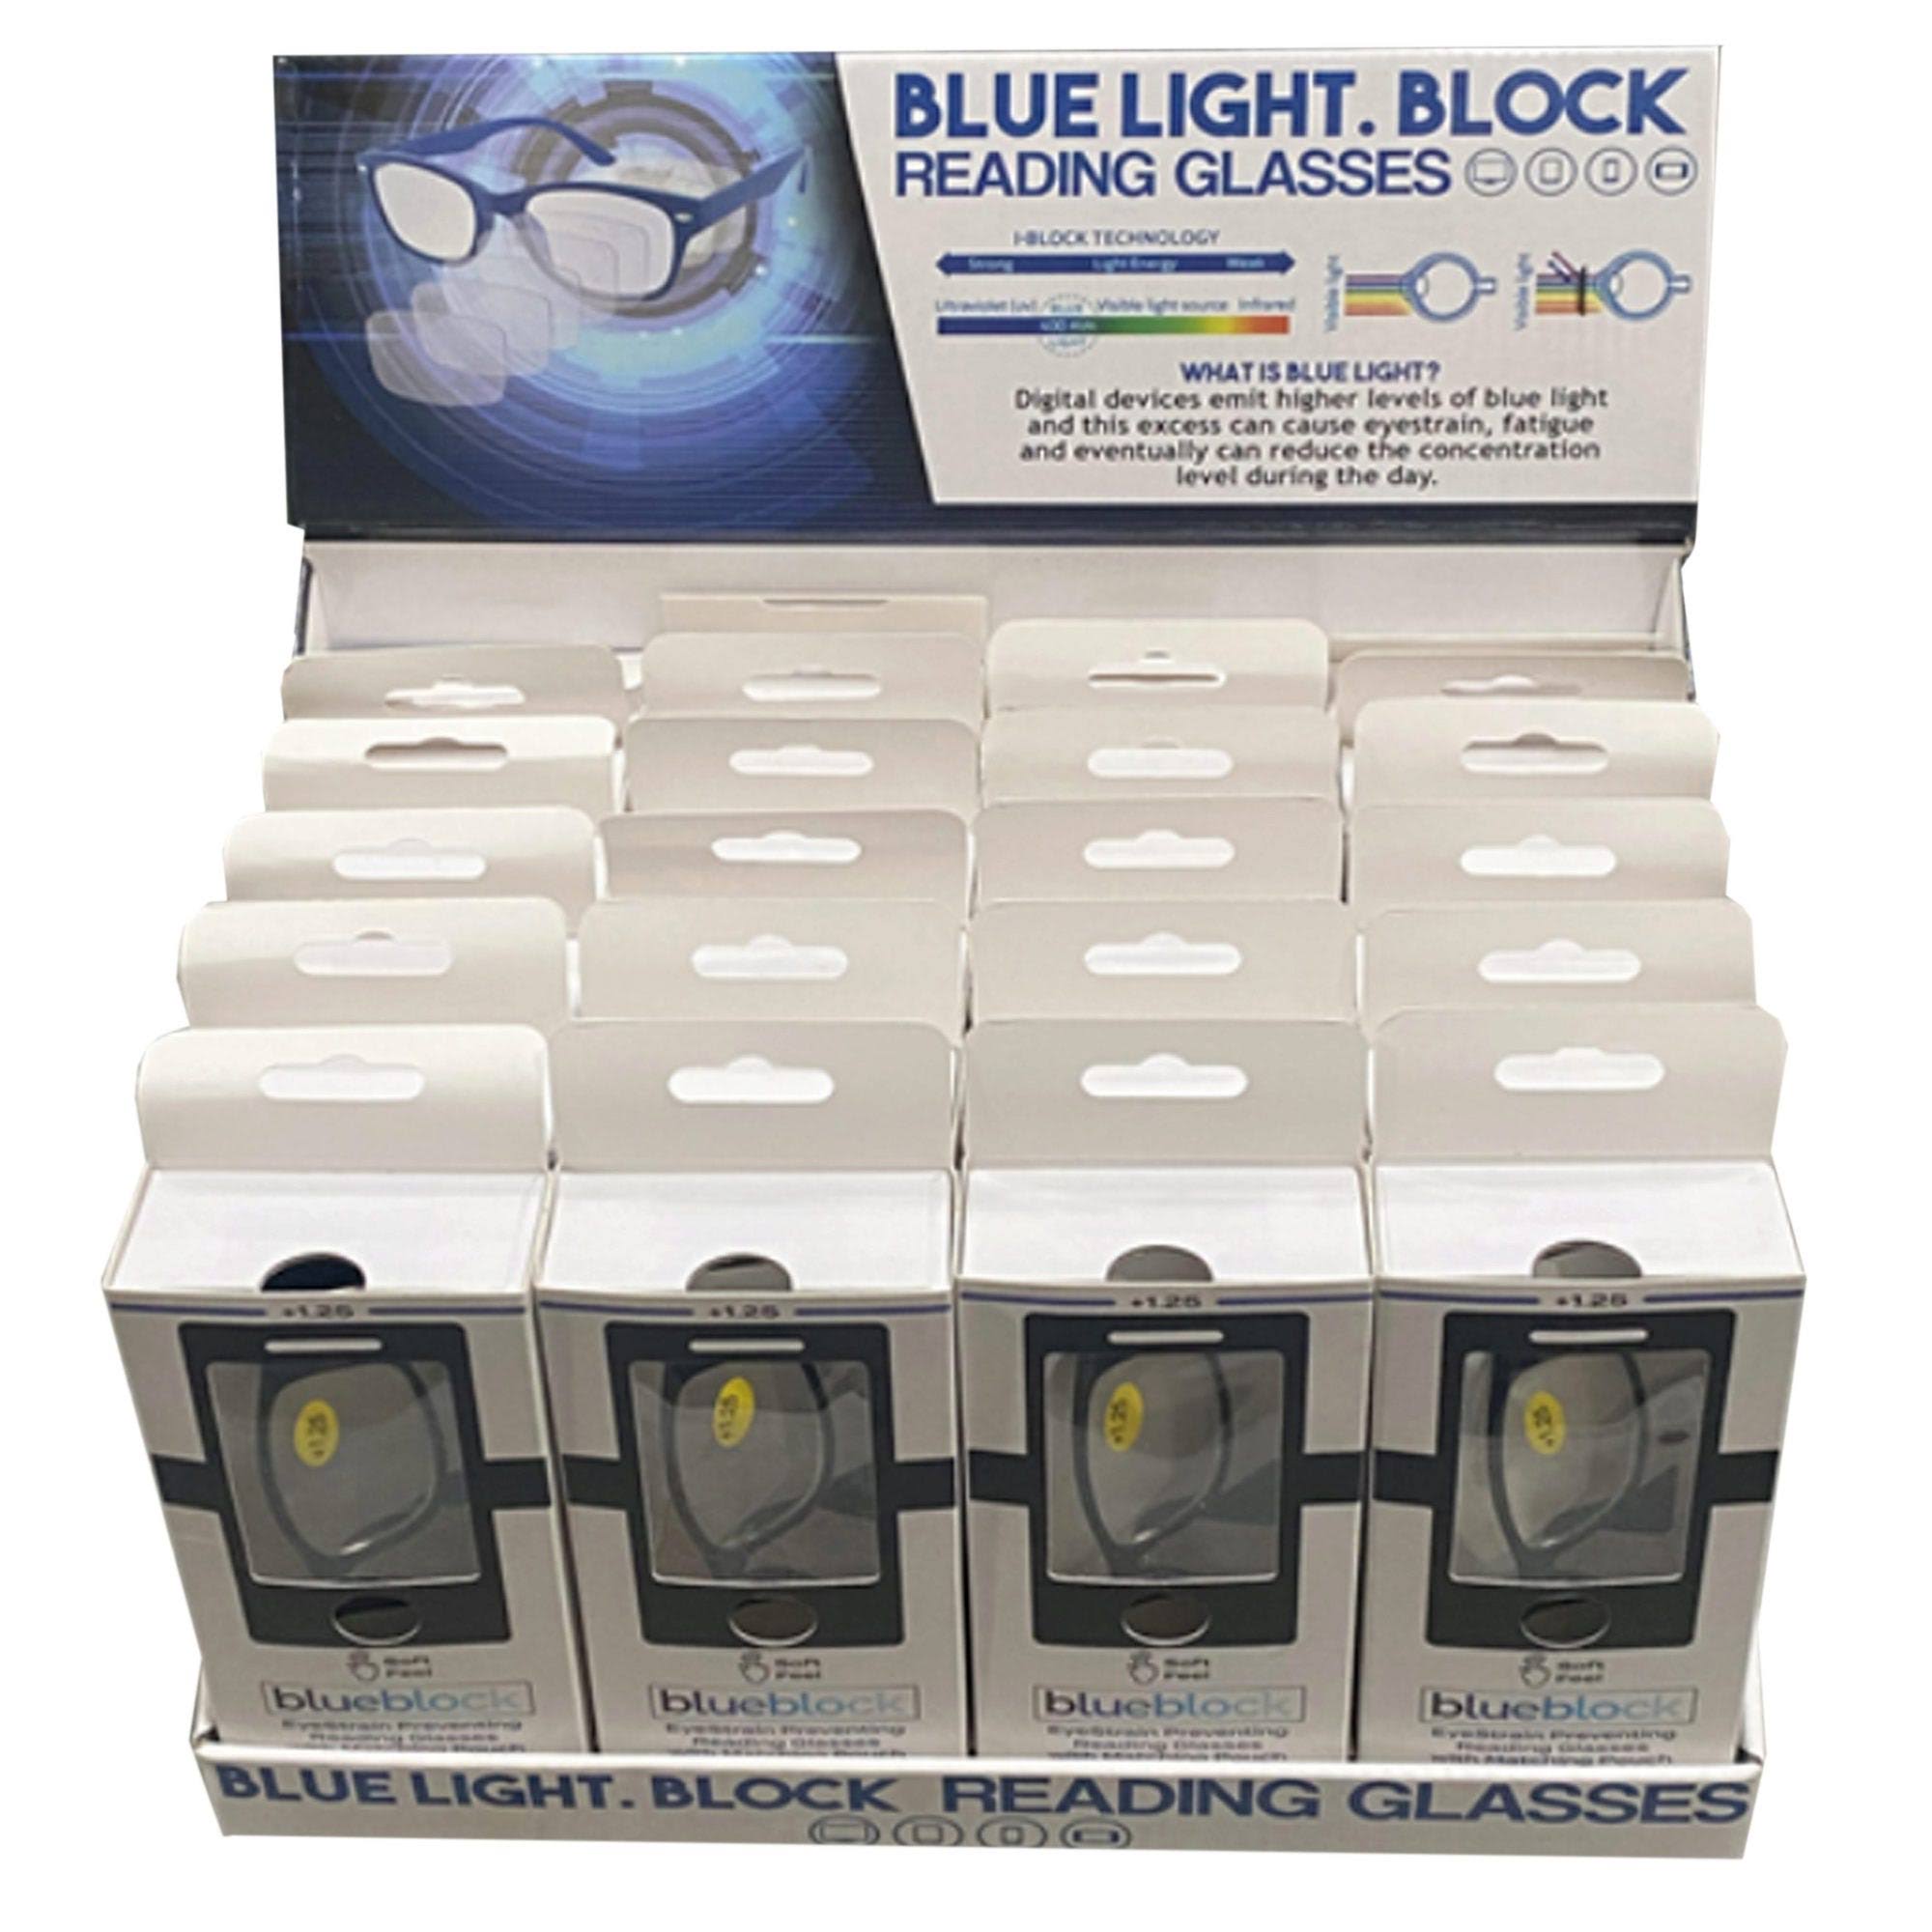 Blue Light Block Reading Glasses in Display 24 GR341